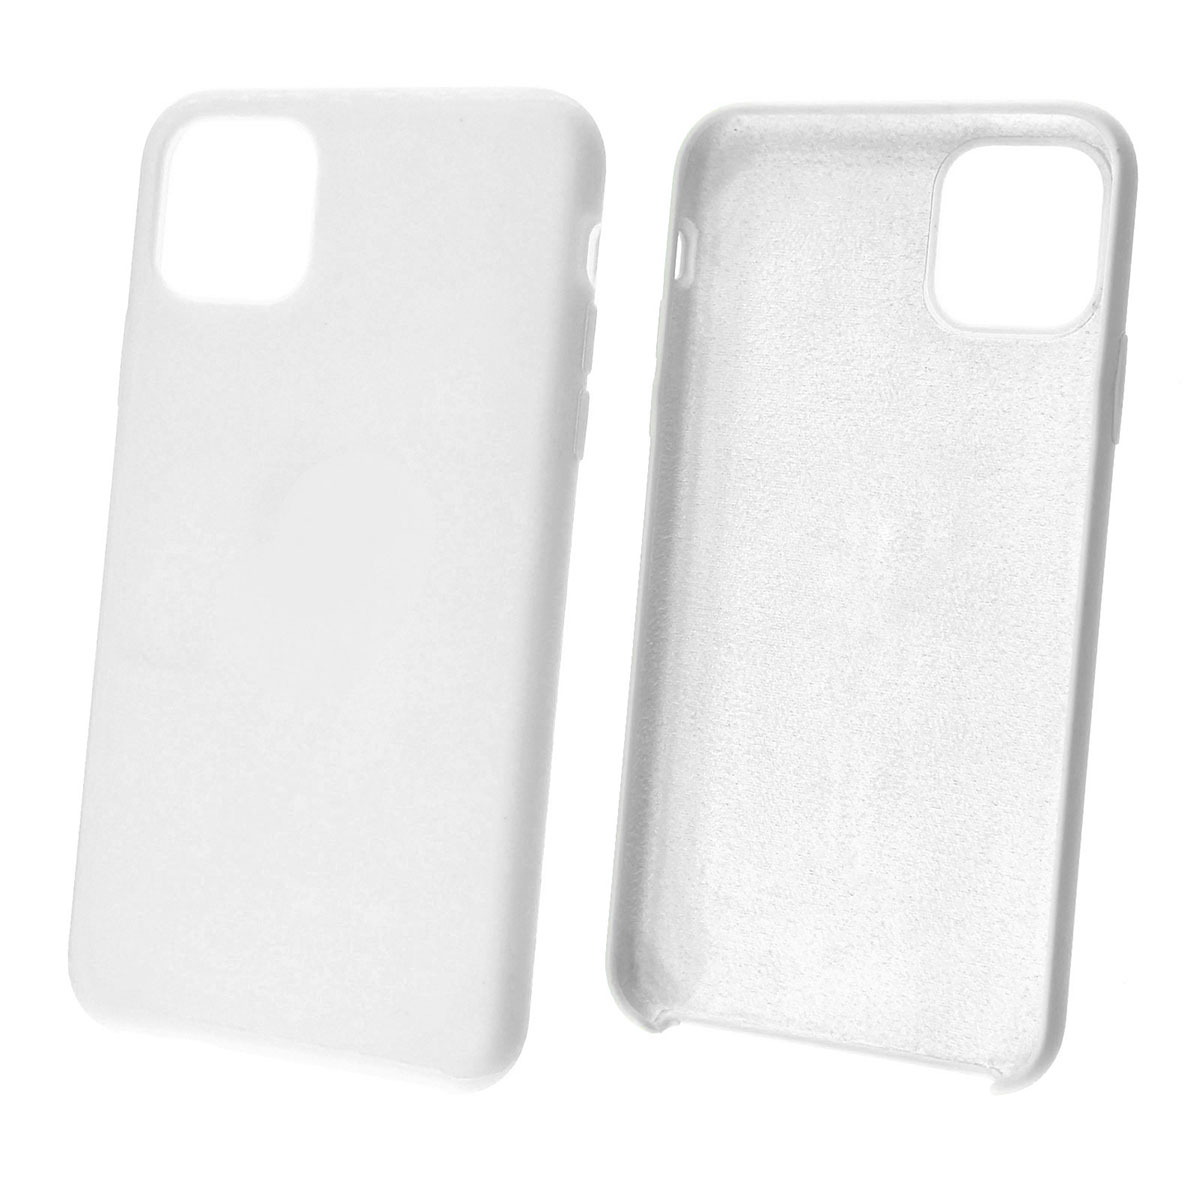 Чехол накладка Silicon Case для APPLE iPhone 11 Pro MAX, силикон, бархат, цвет бежевый.